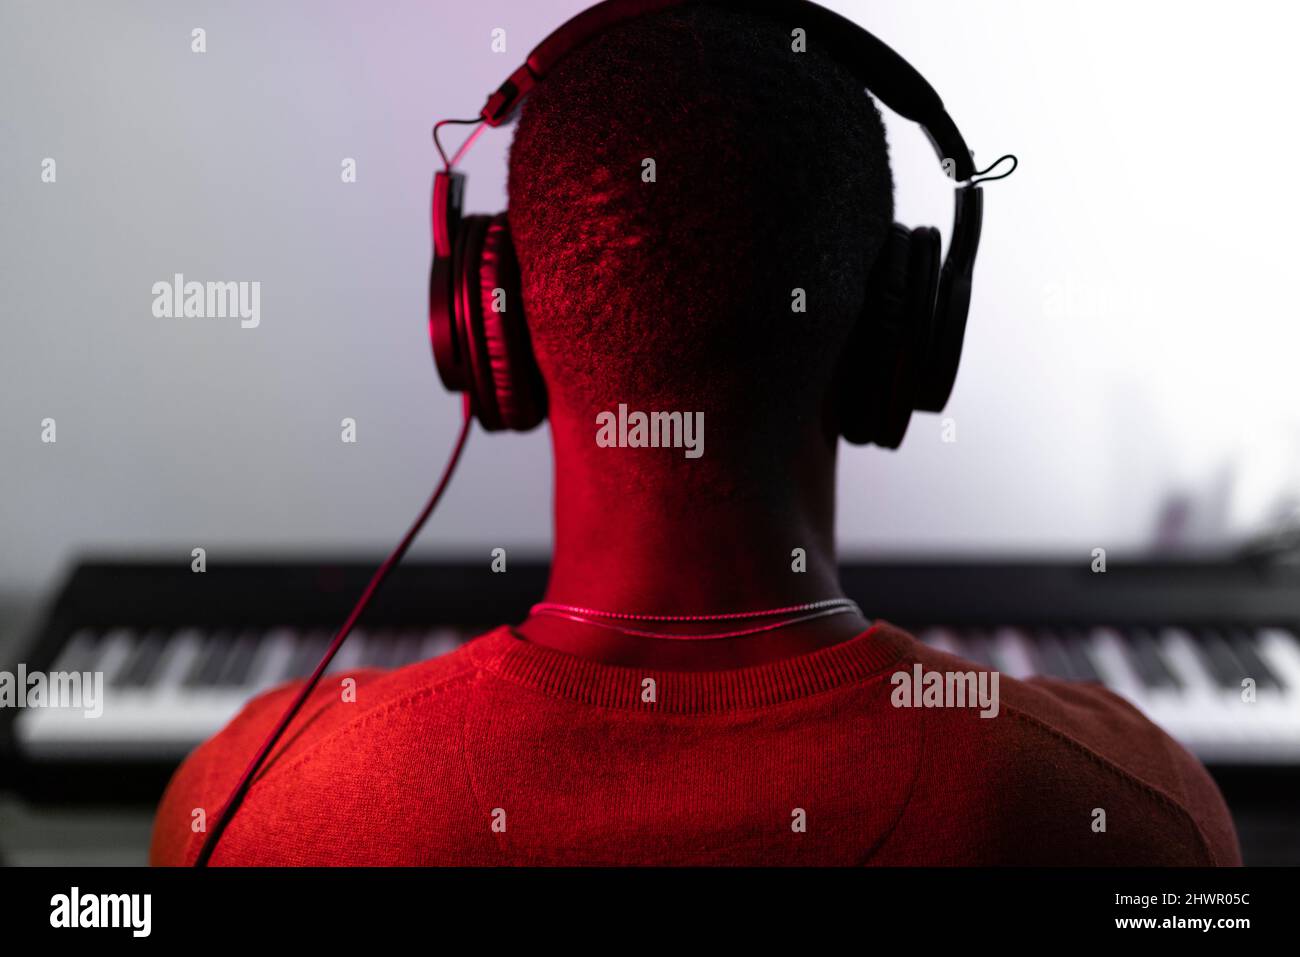 Man wearing headphones in front of piano Stock Photo